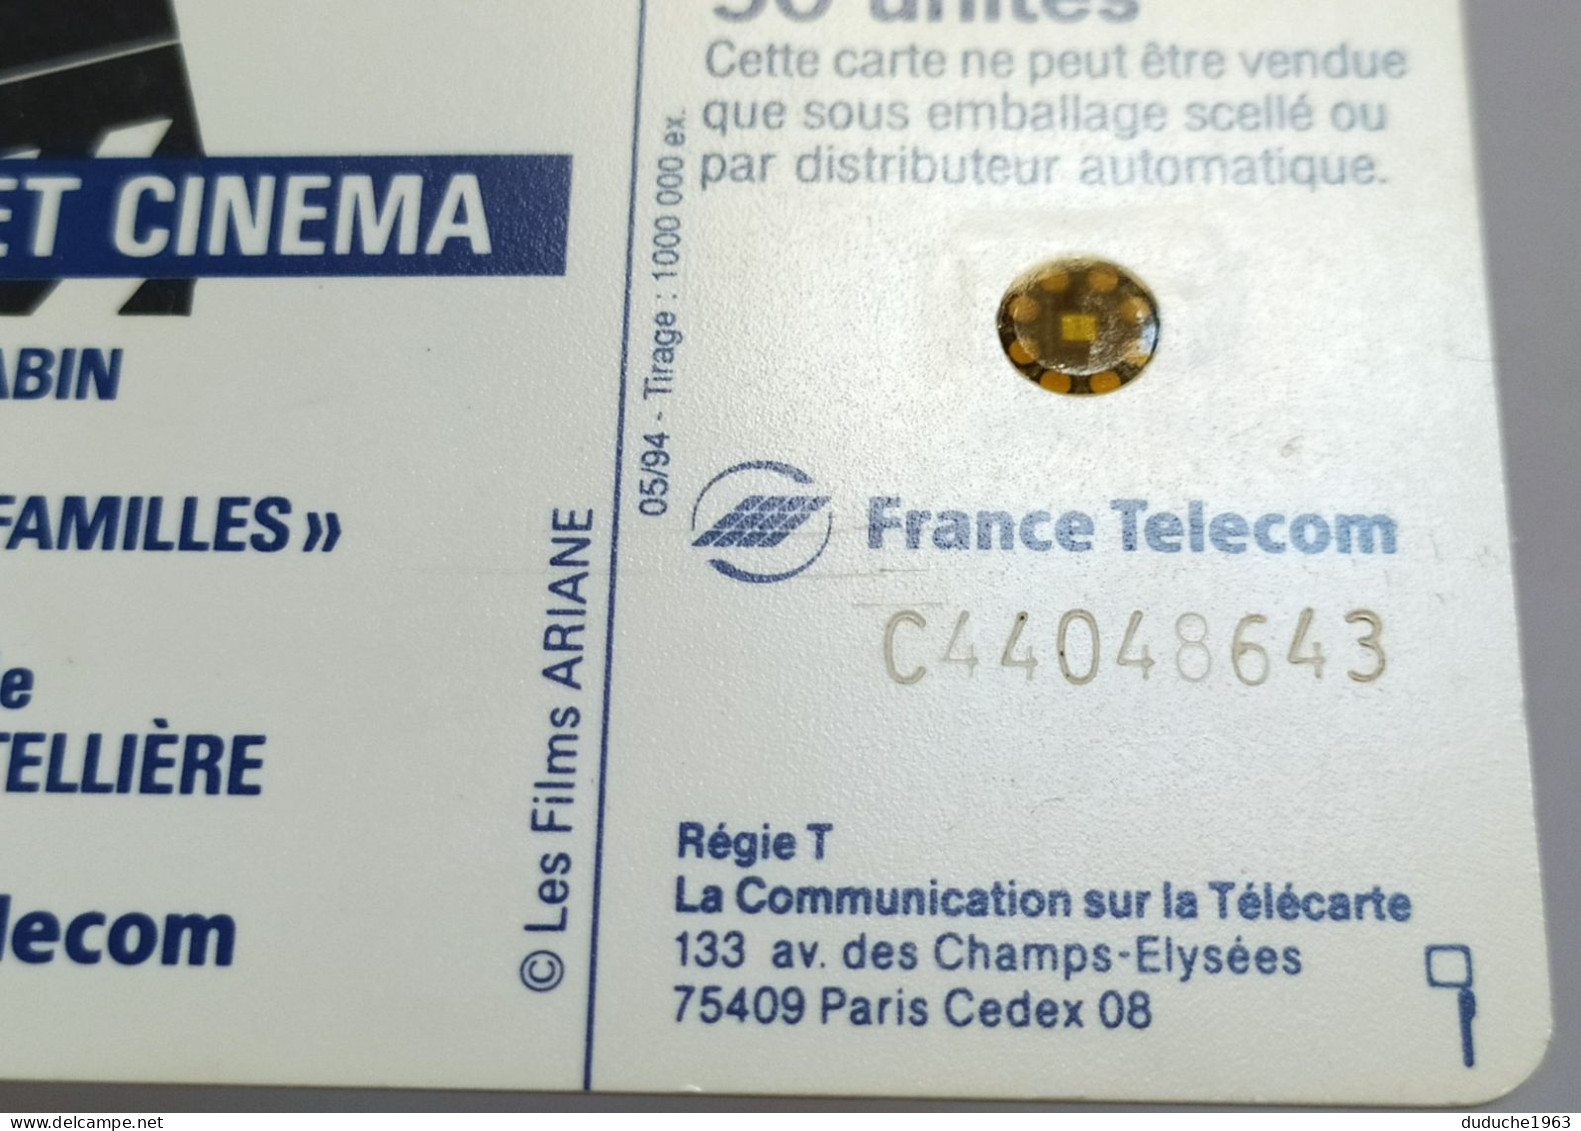 Télécarte France - Téléphone Et Cinéma - Jean Gabin - Ohne Zuordnung